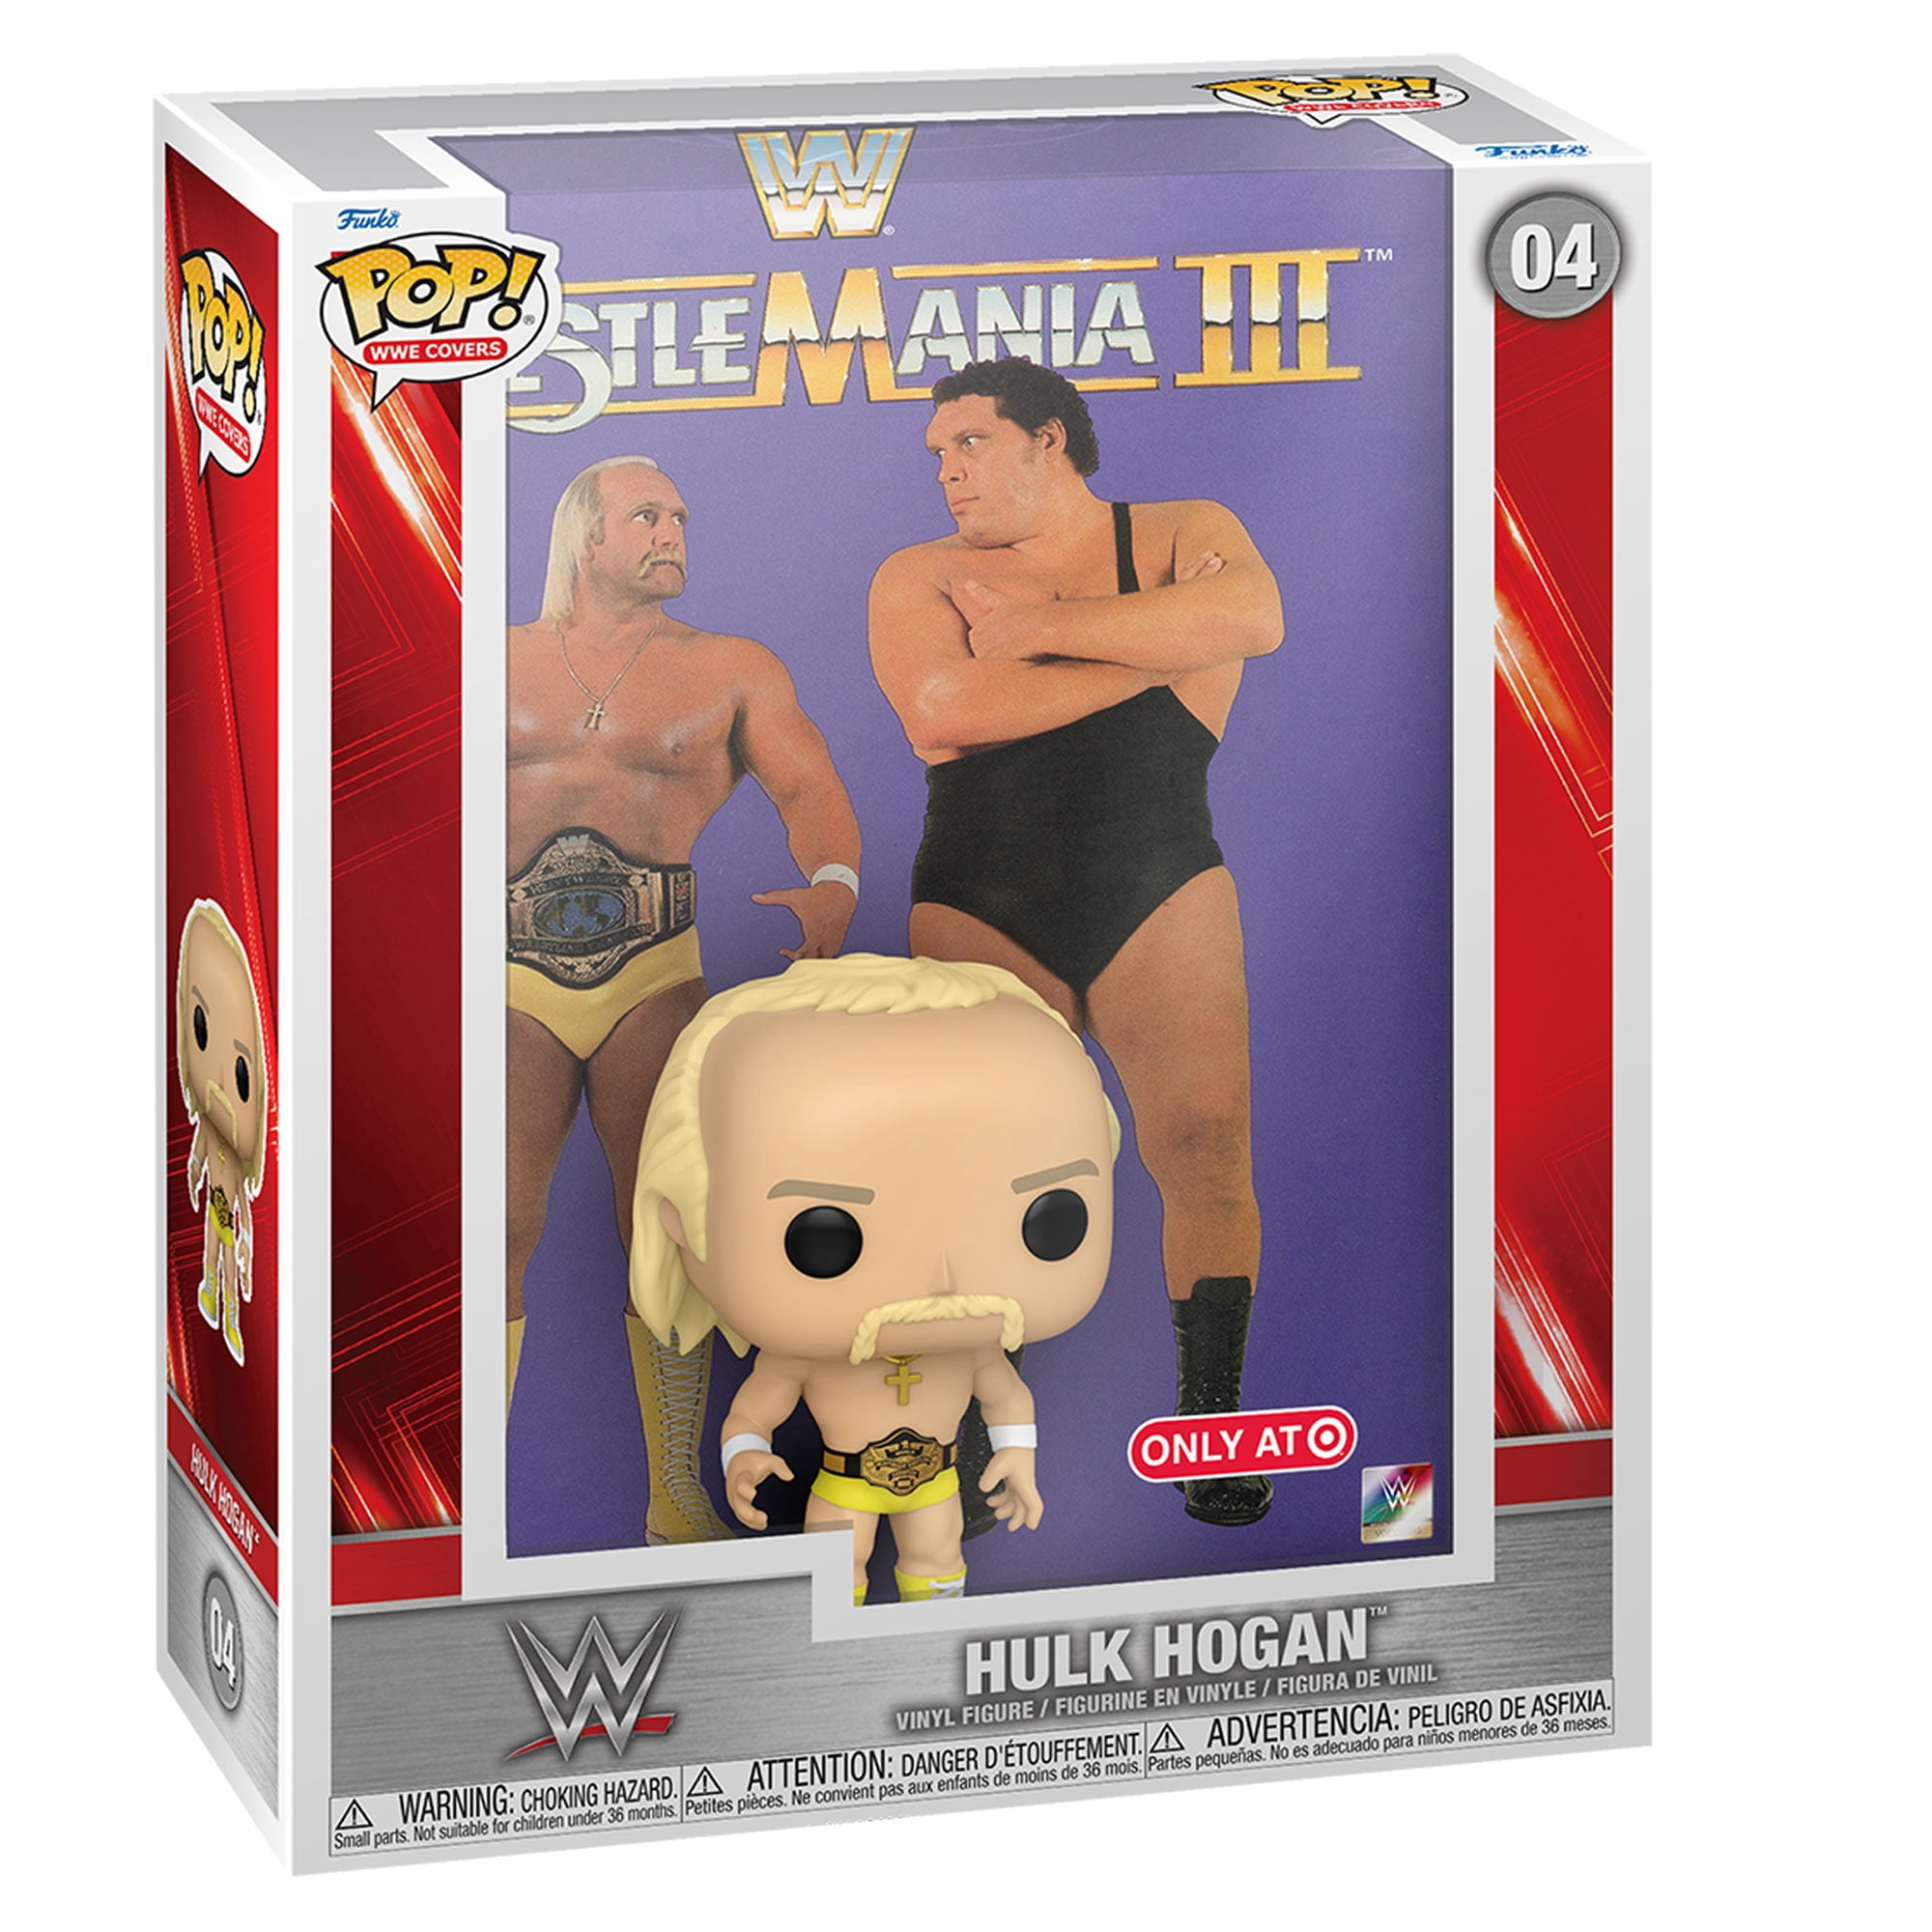 Funko Pop! WWE Hulk Hogan Figure w/ WrestleMania III Cover Case $8 + Free Shipping